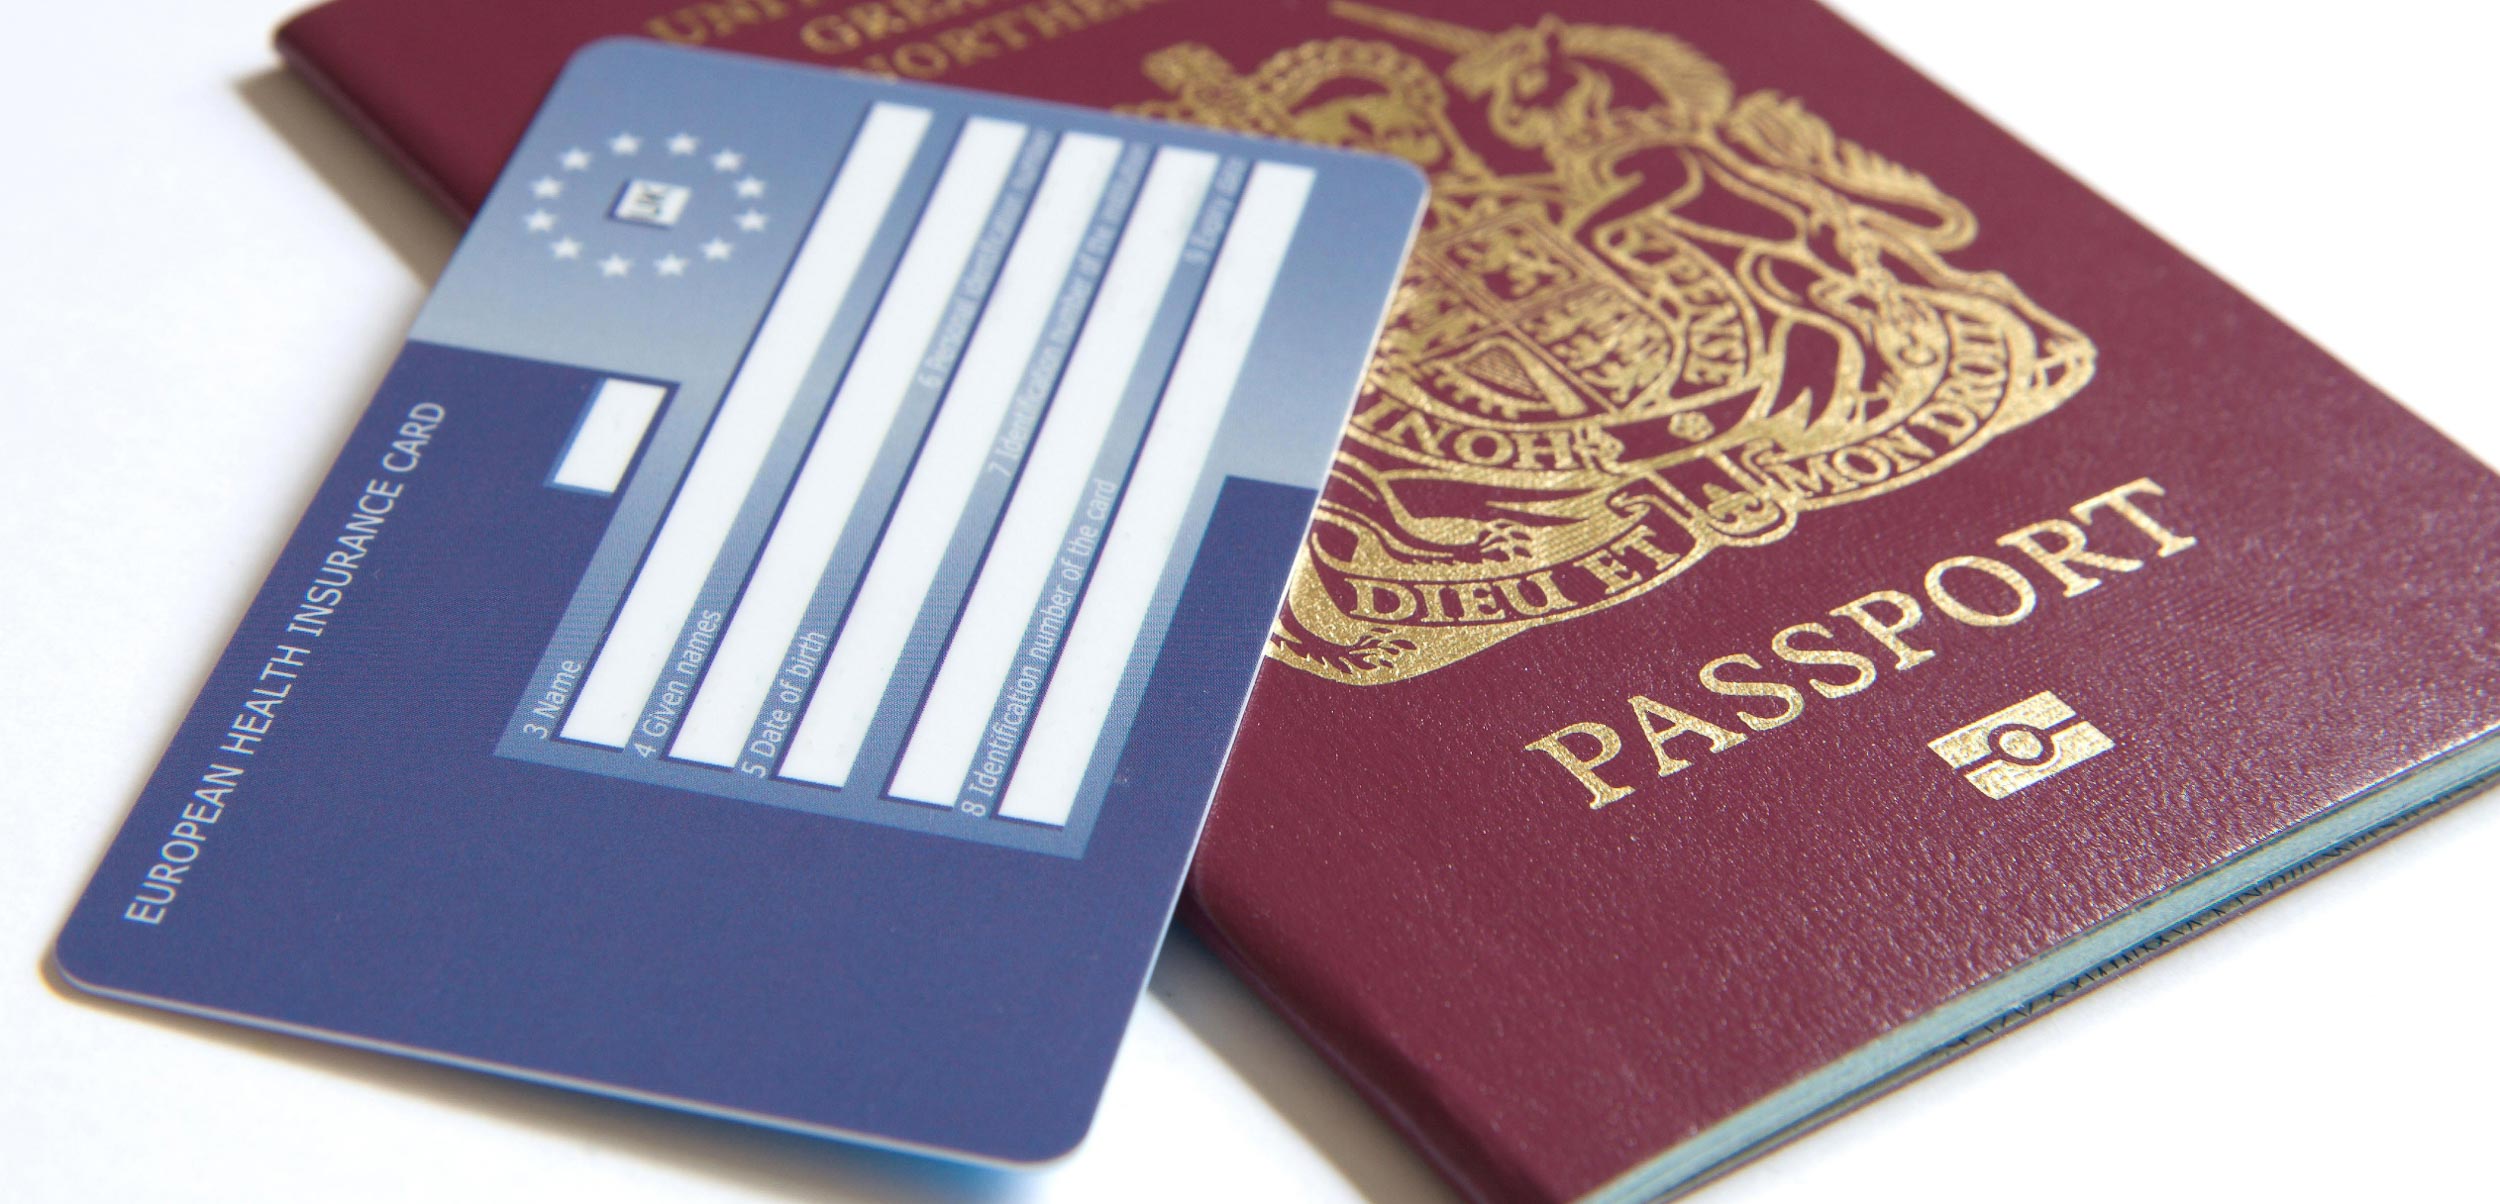 European Health Insurance Card with passport